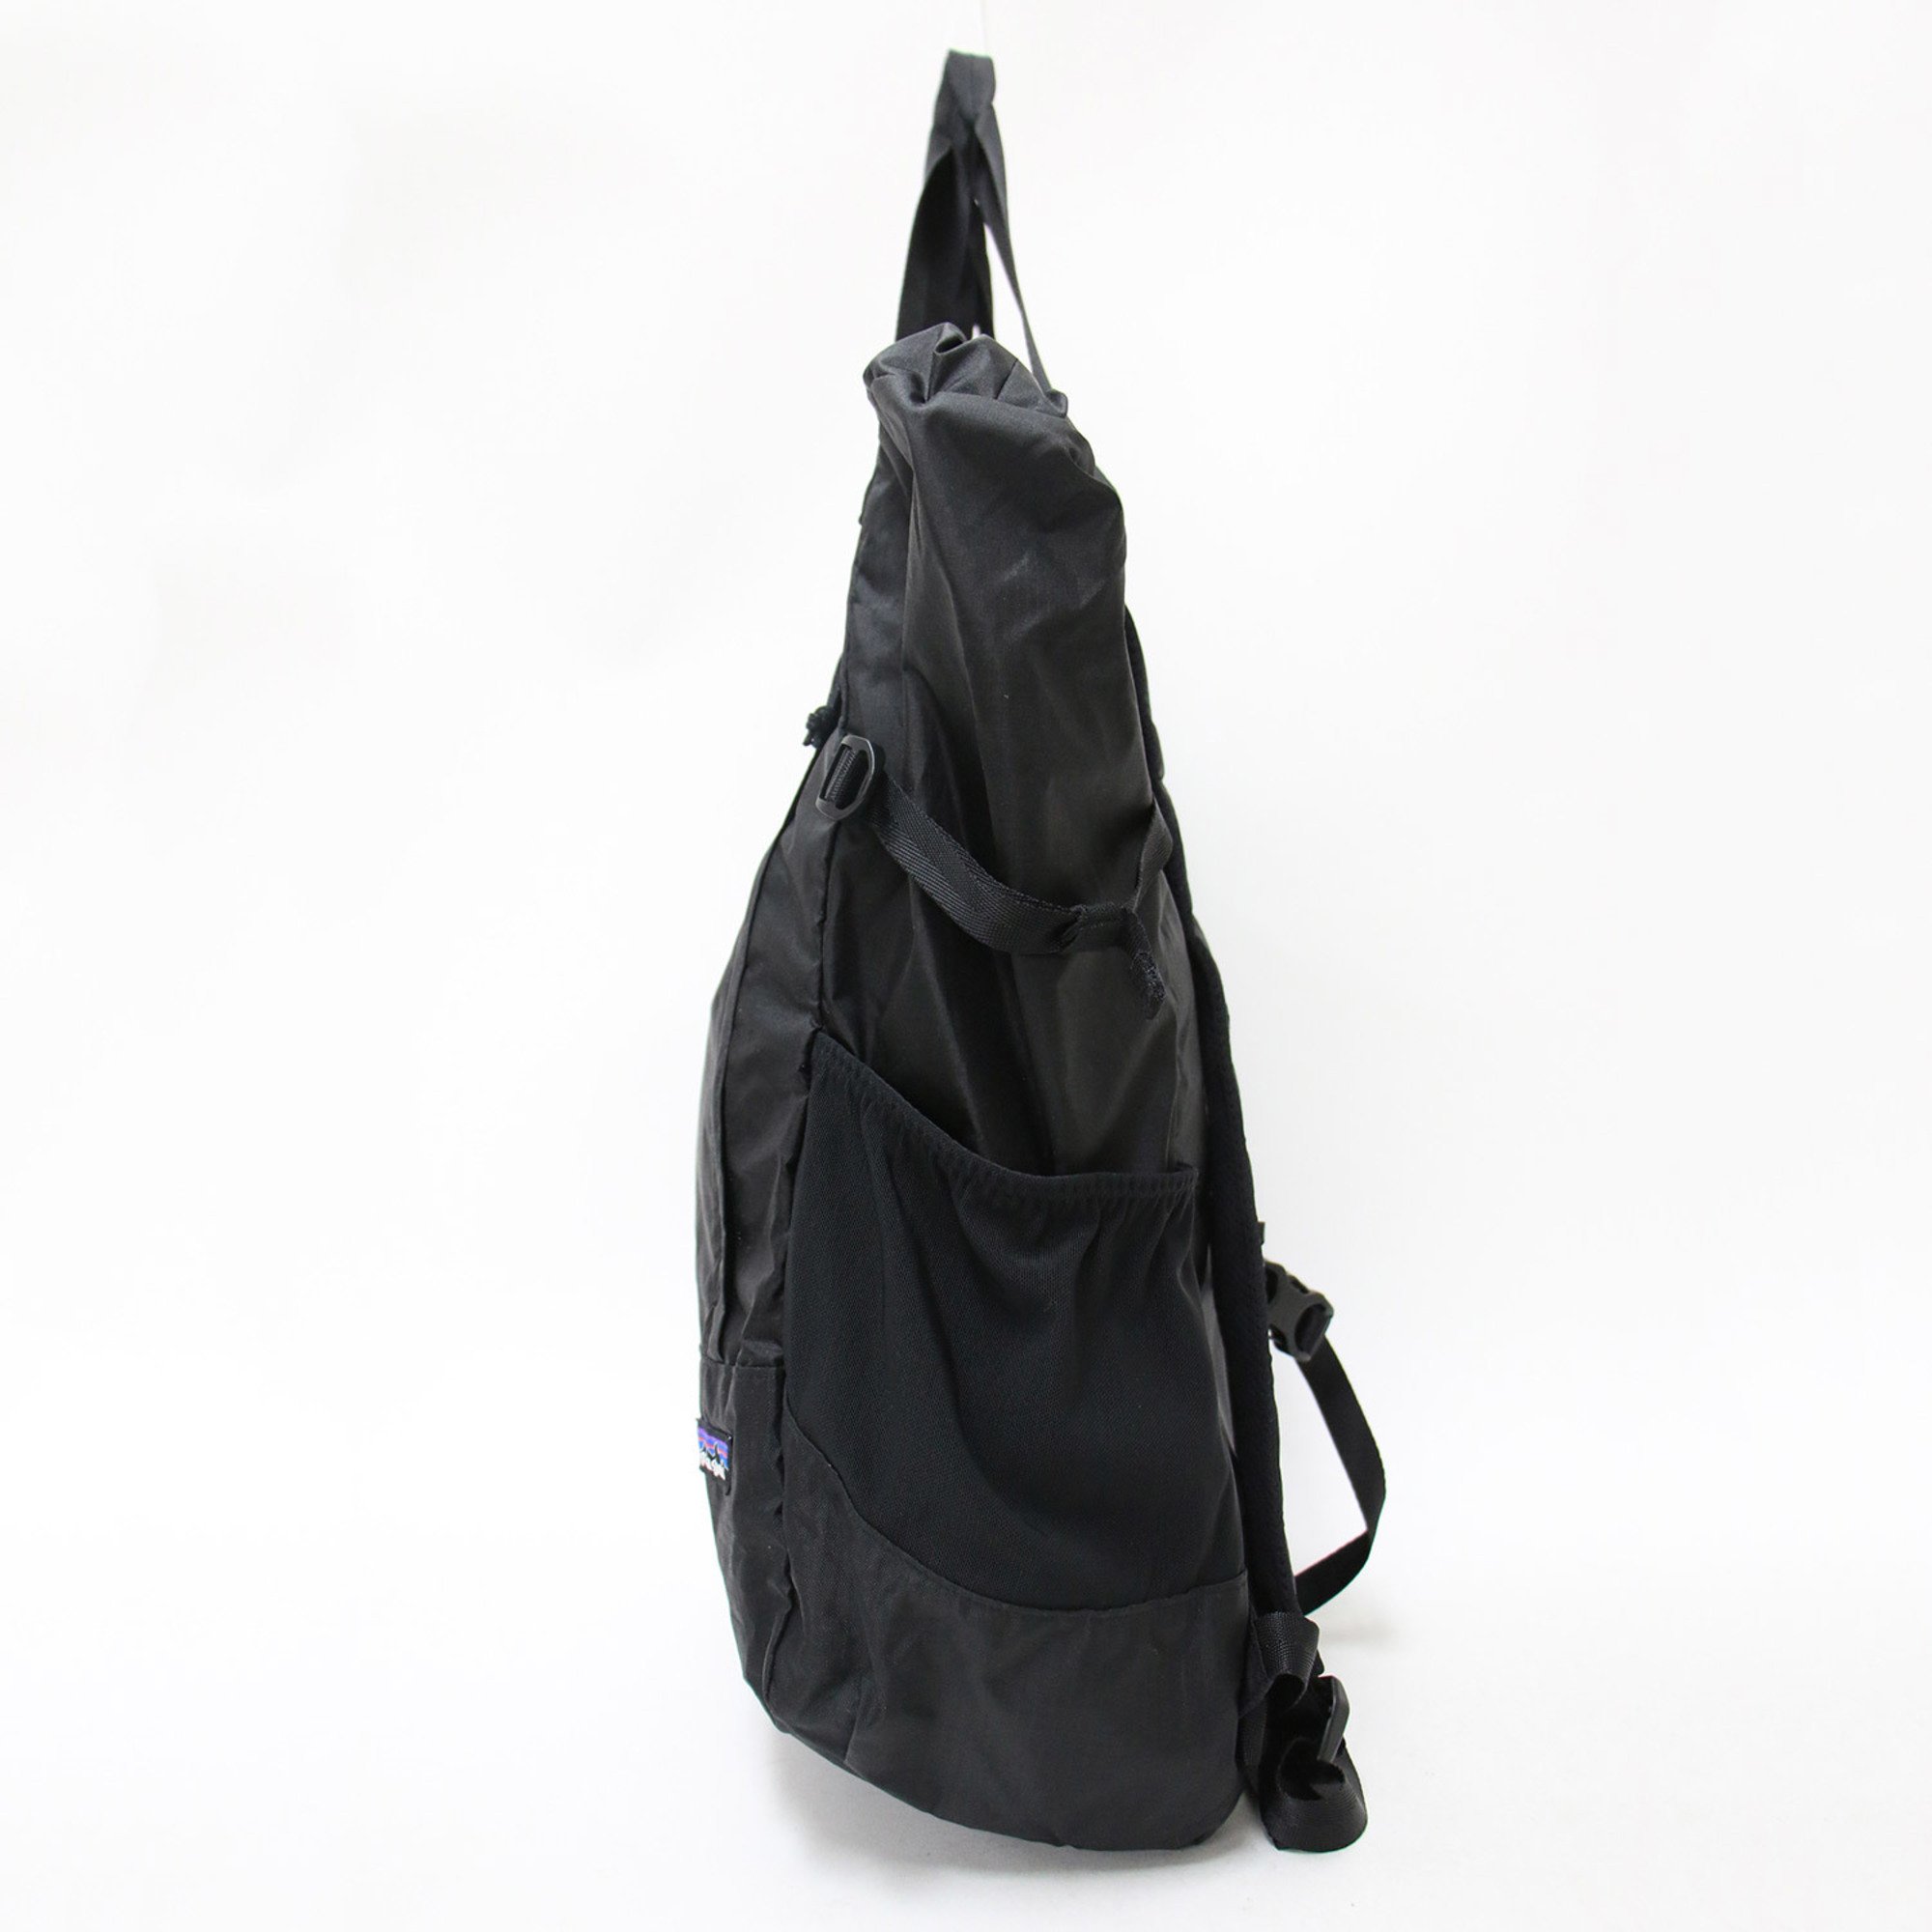 Patagonia Bag Rucksack Backpack Tote Lightweight Pack 22L Black Outdoor